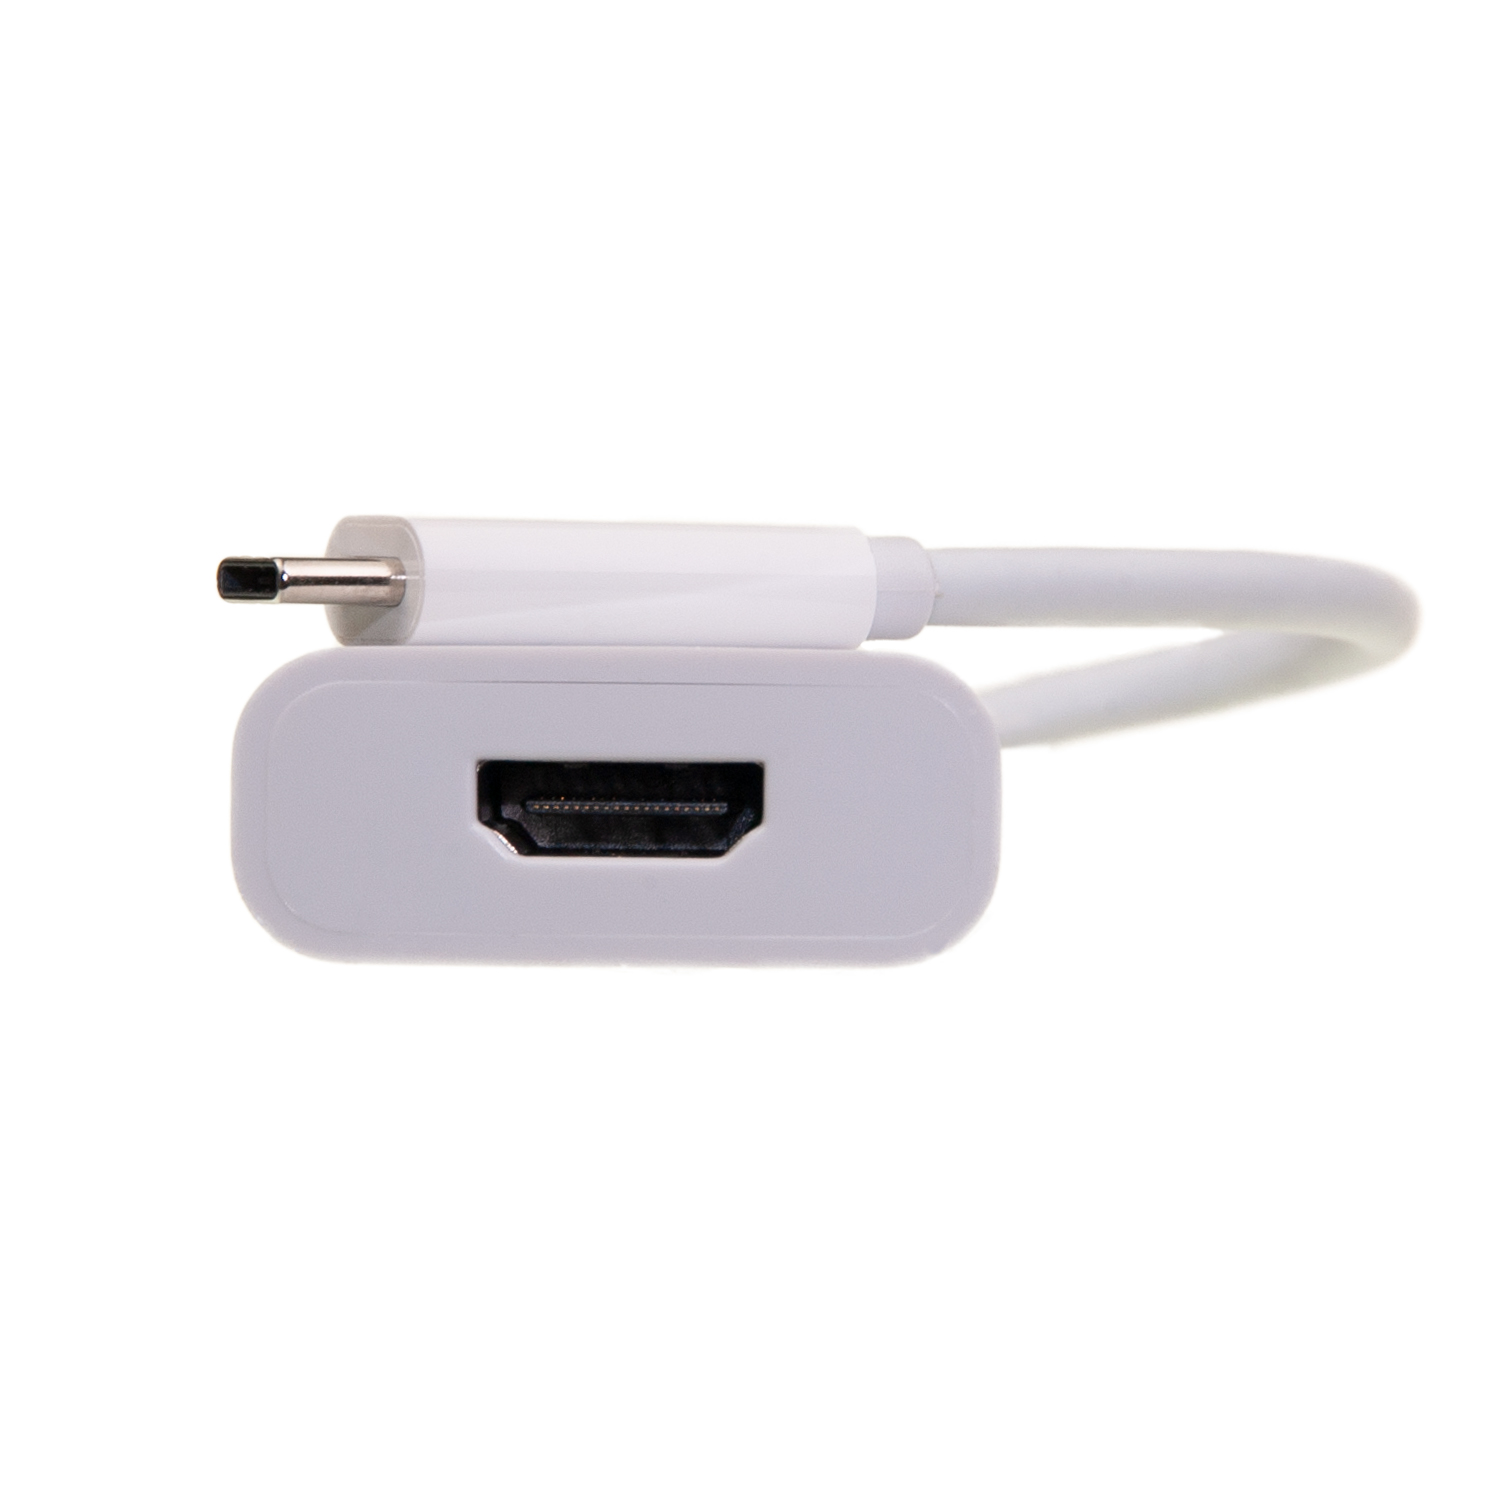 ADAPTADOR USB TIPO C 3.1 A HDMI